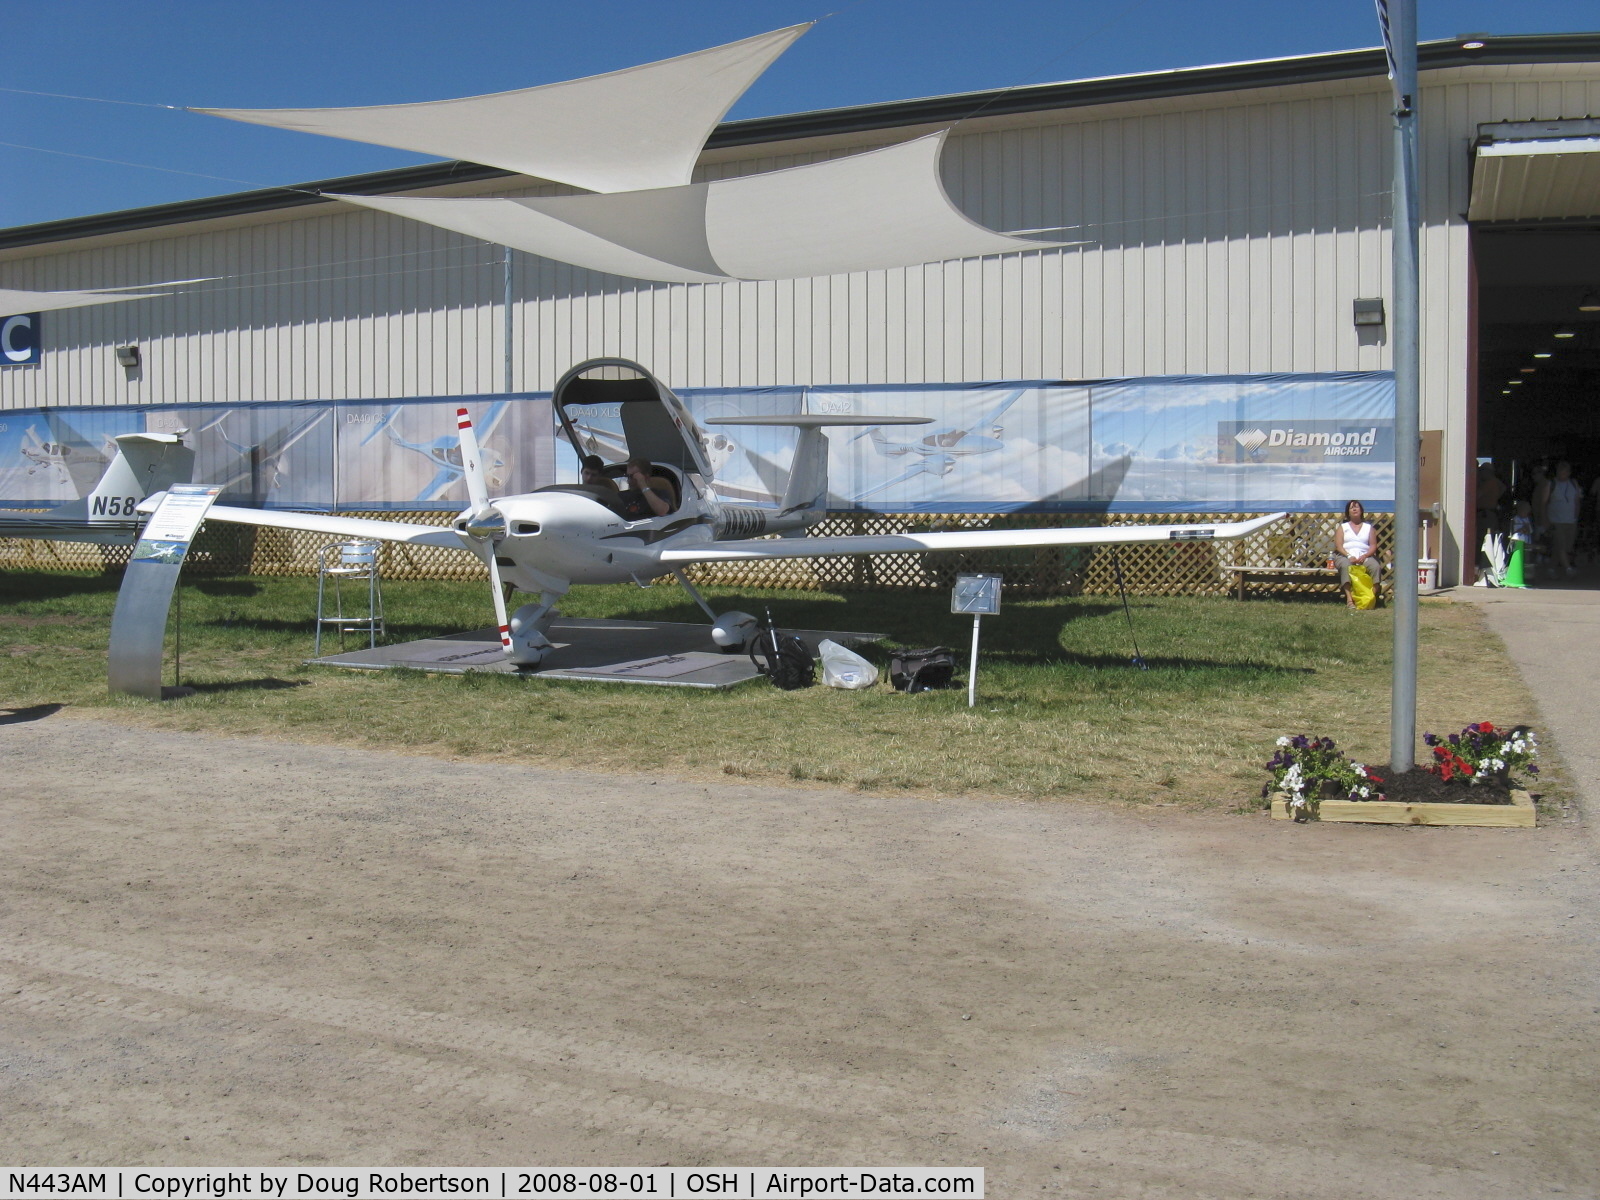 N443AM, 2007 Diamond DA-20C-1 Eclipse C/N C0443, 2007 Diamond Aircraft Ind. Inc. DA 20-C1 ECLIPSE, Continental IO-240-B 125 Hp two place